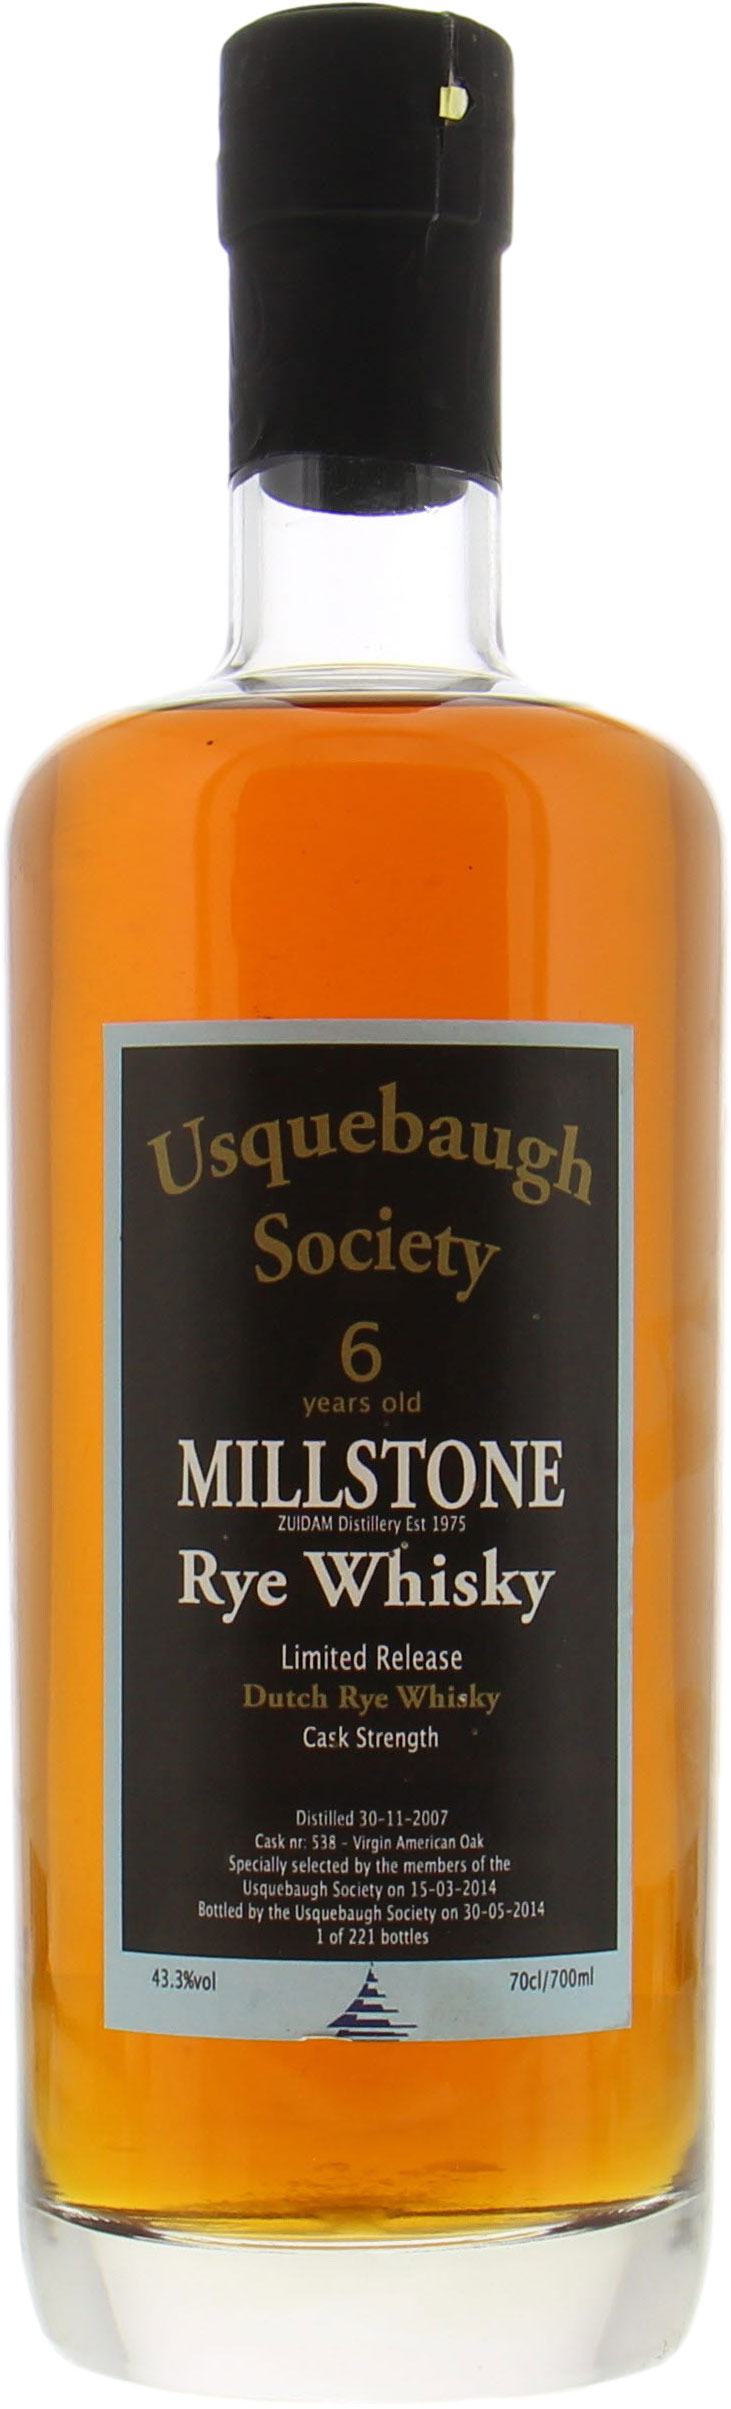 Millstone - 6 Years Old Rye Cask 538 Usquebaugh Society 43.3% 2007 Perfect